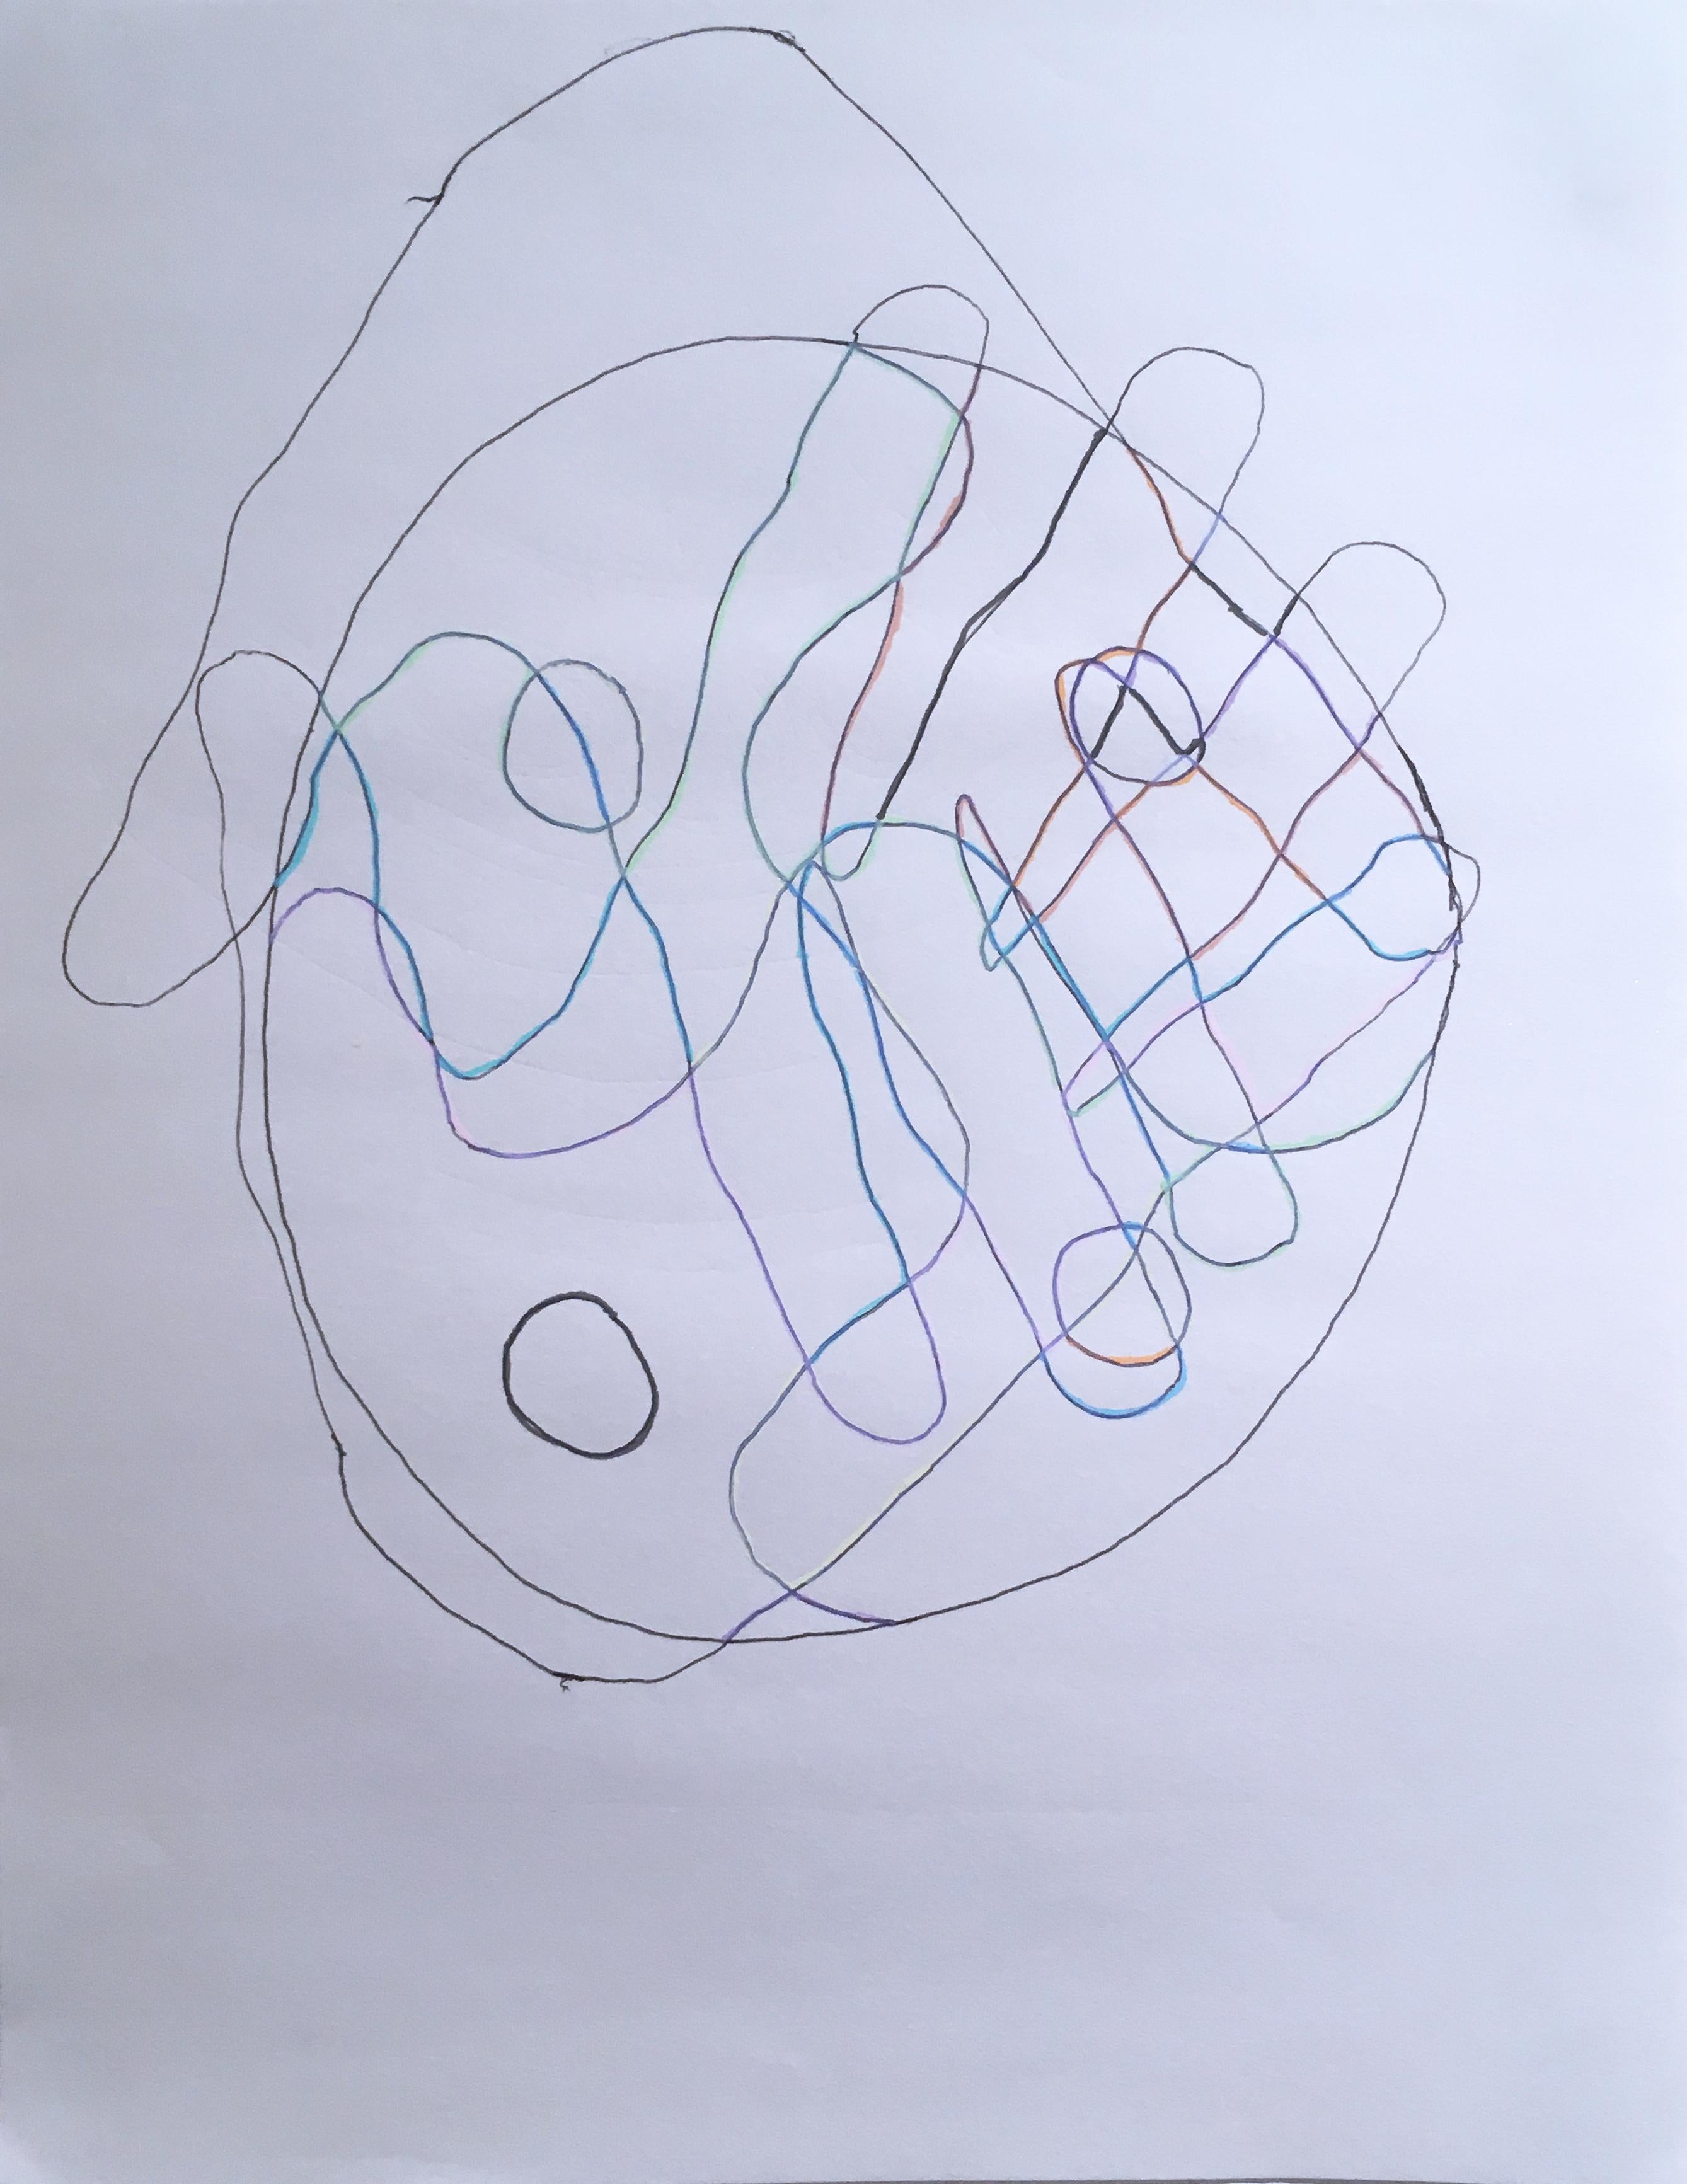 Hand Over Hand, 2020, gel pen, drawing, pink, pattern, hand, yin yang, blue - Art by Macauley Norman